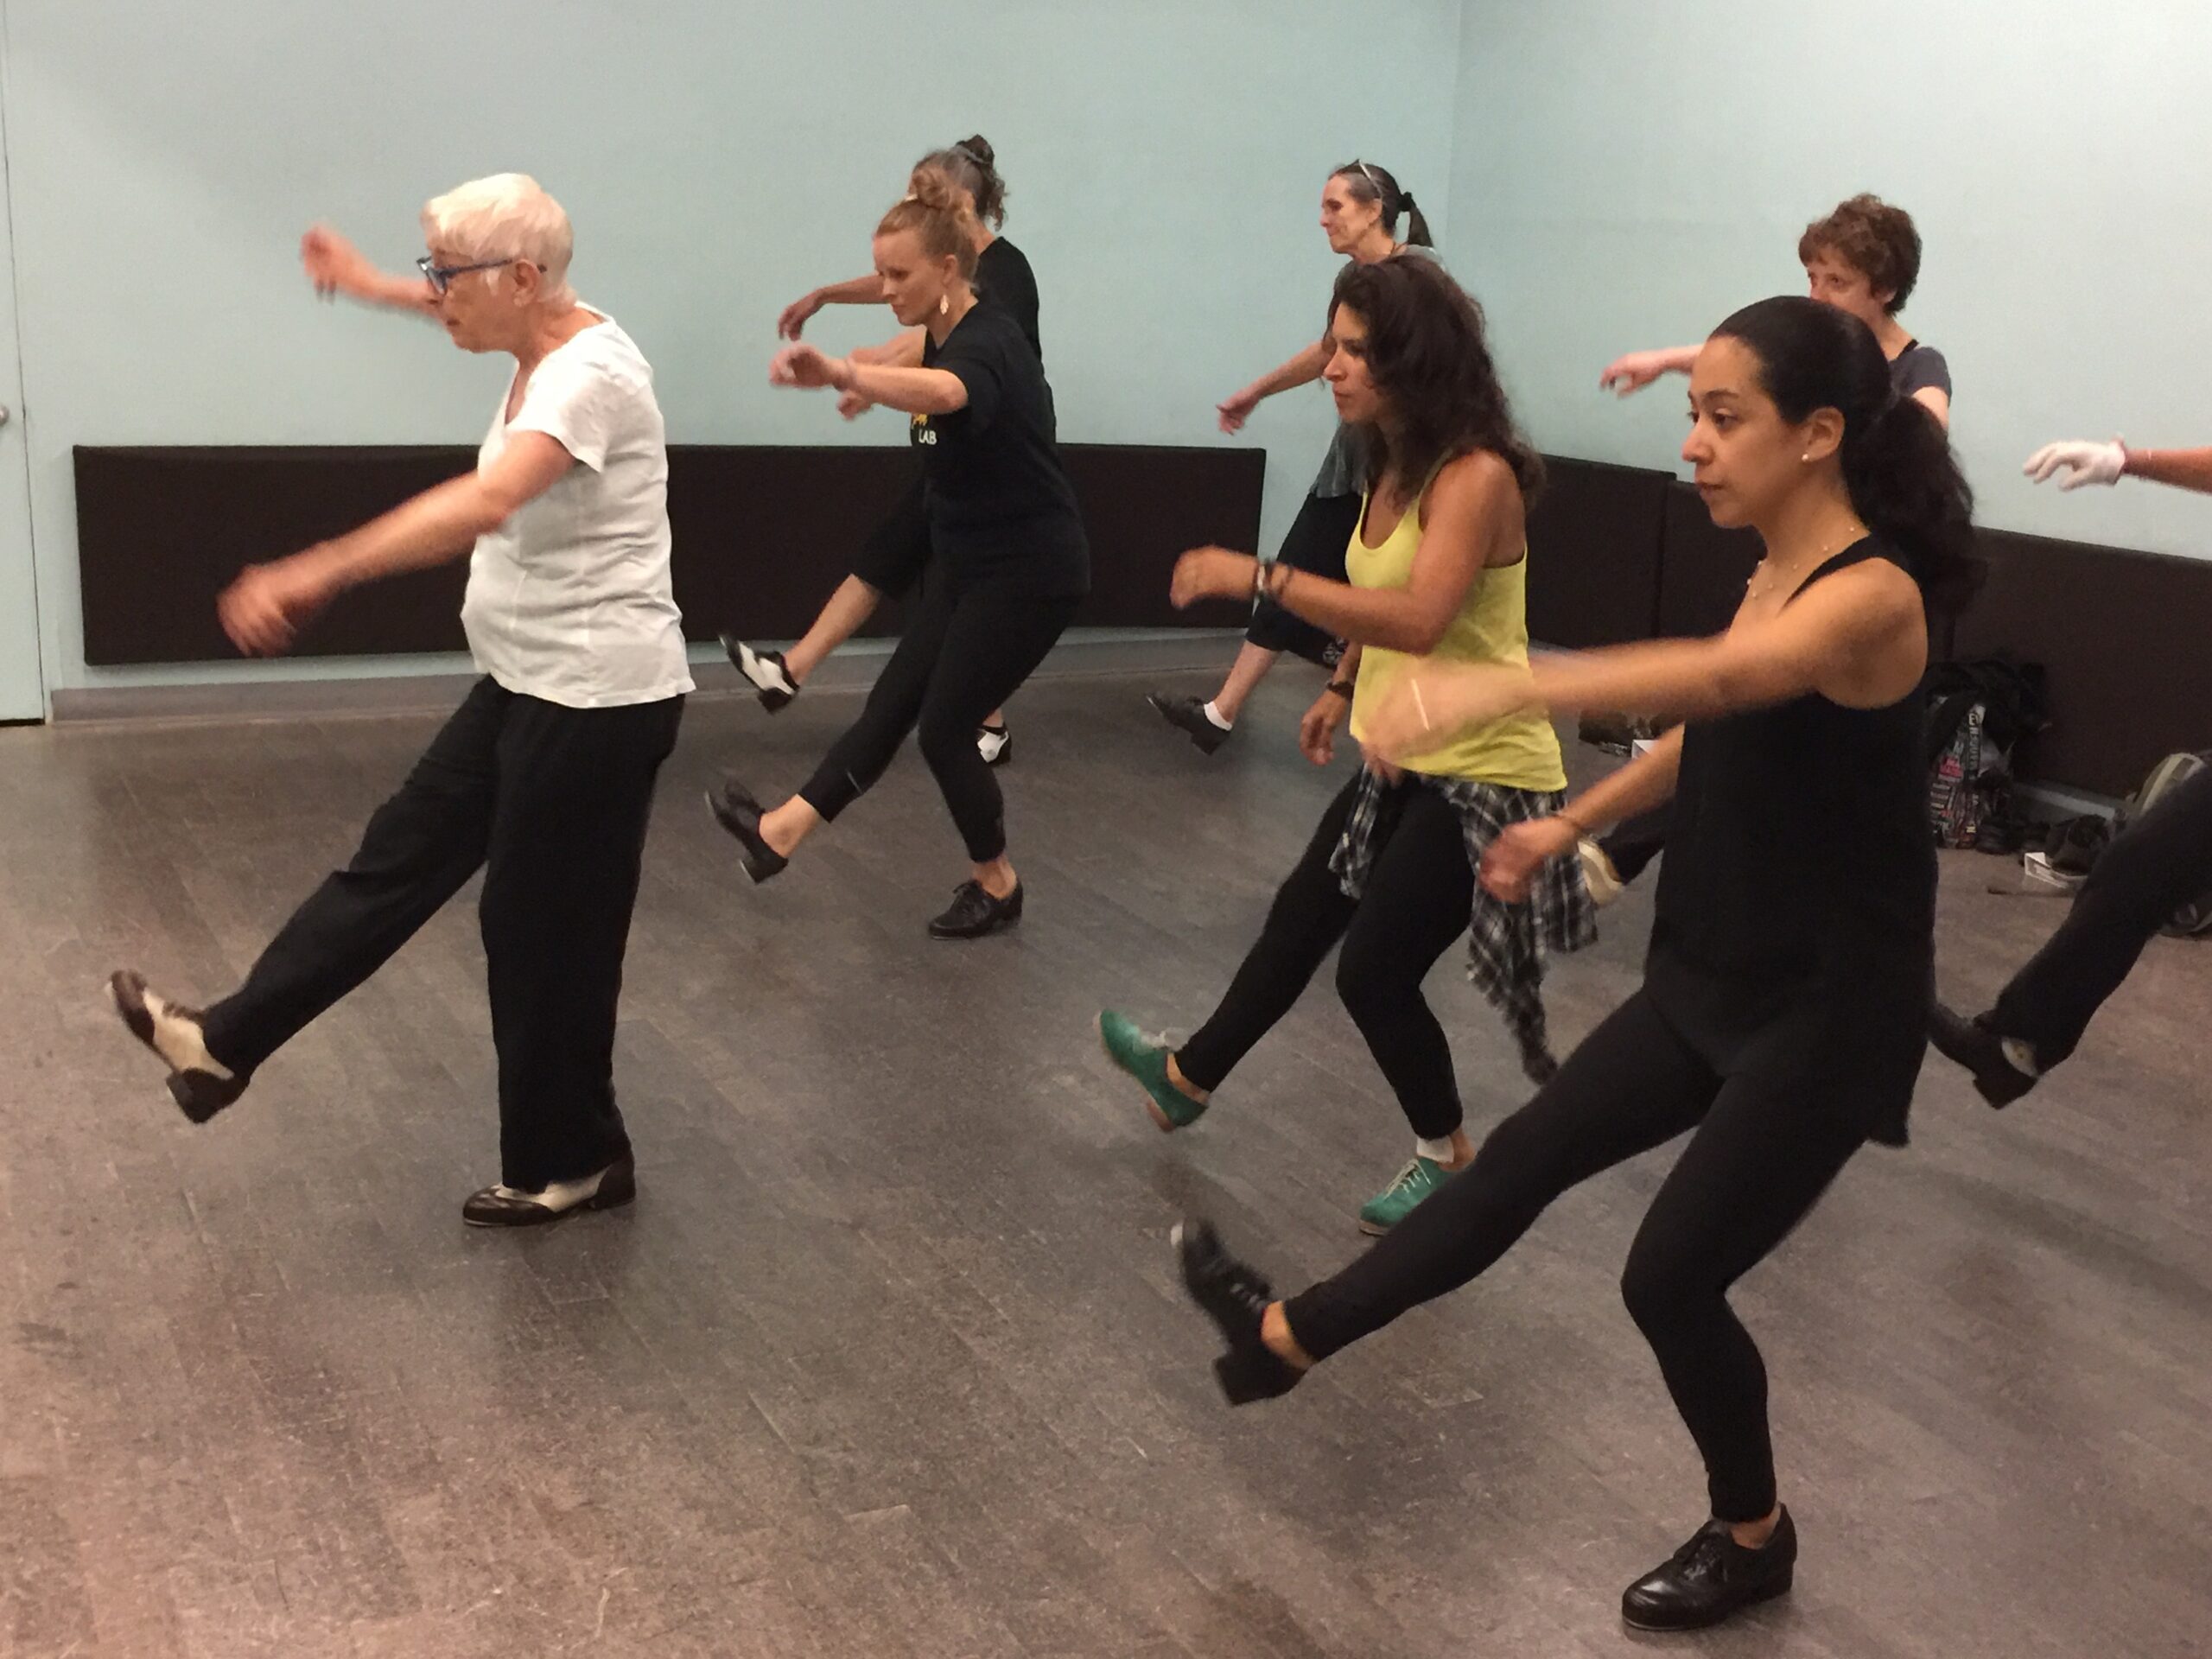 Dance educator Brenda Bufalino teaching a group of tap dance students.